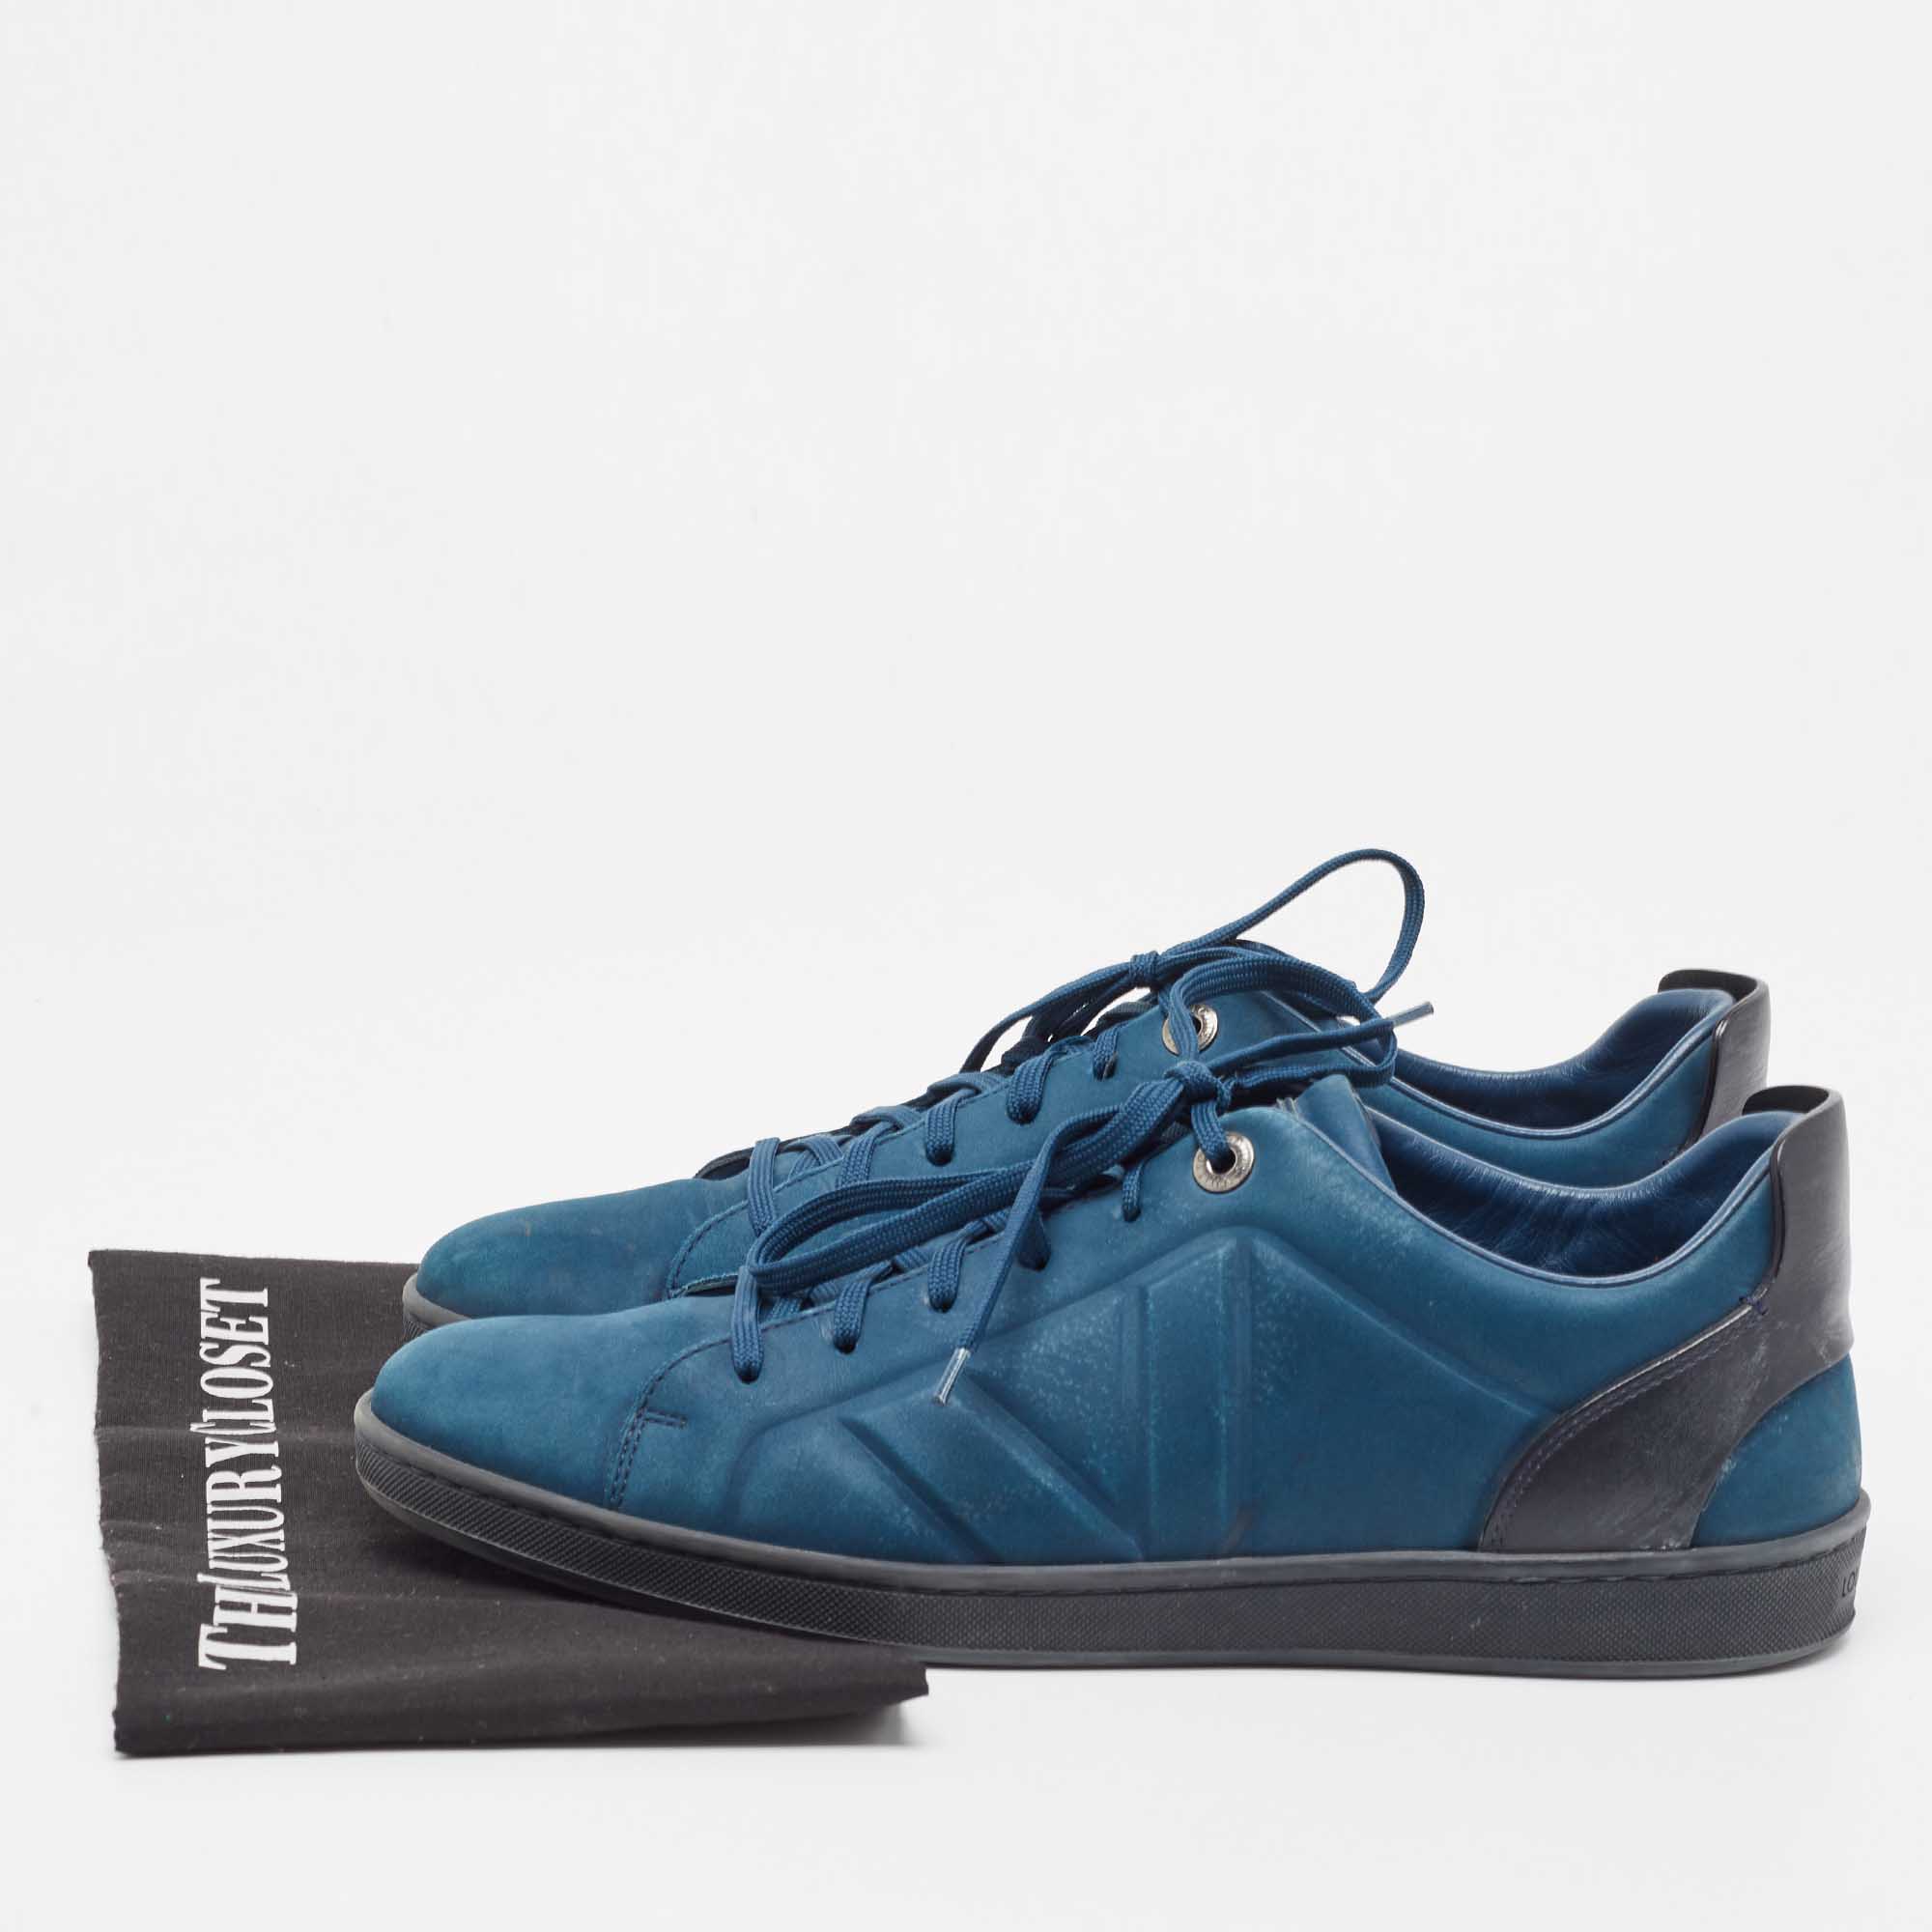 Louis Vuitton Blue Nubuck Leather Fuselage Low Top Sneakers Size 43